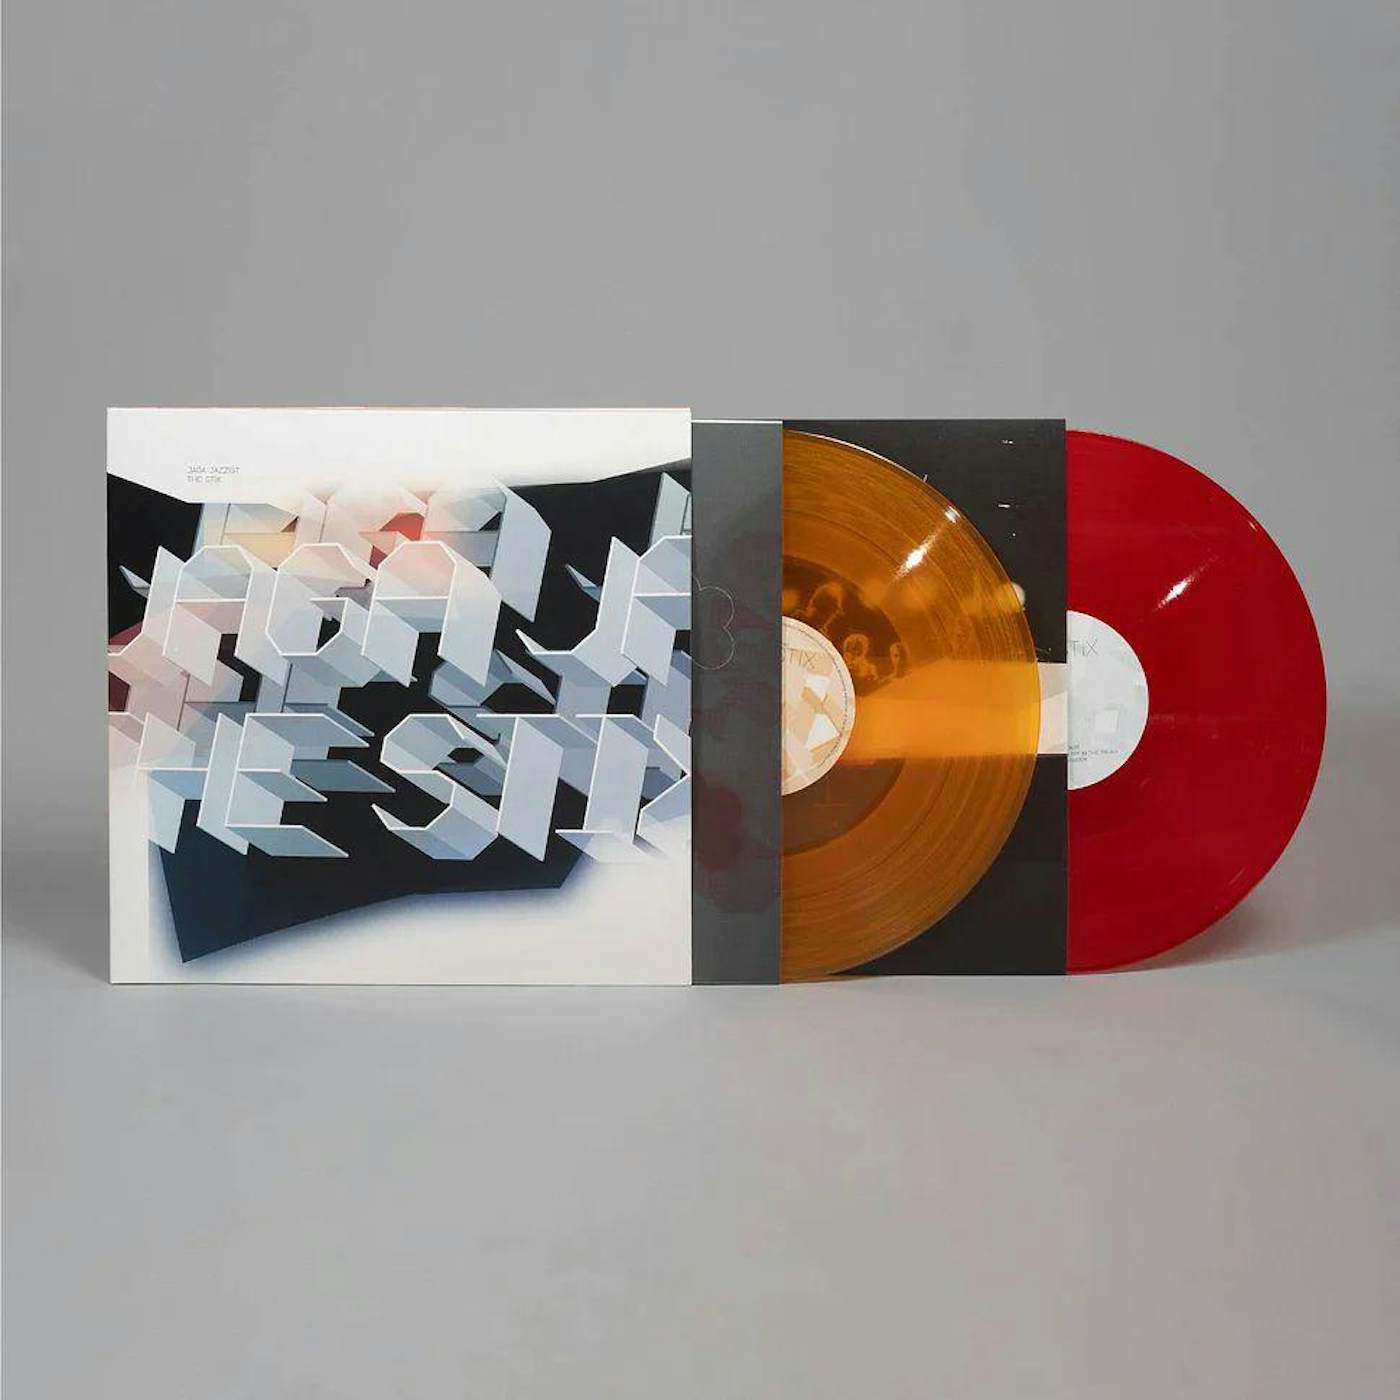 Jaga Jazzist Stix (20th Anniversary Edition) (Orange & Red Translucent/140g/2LP) Vinyl Record